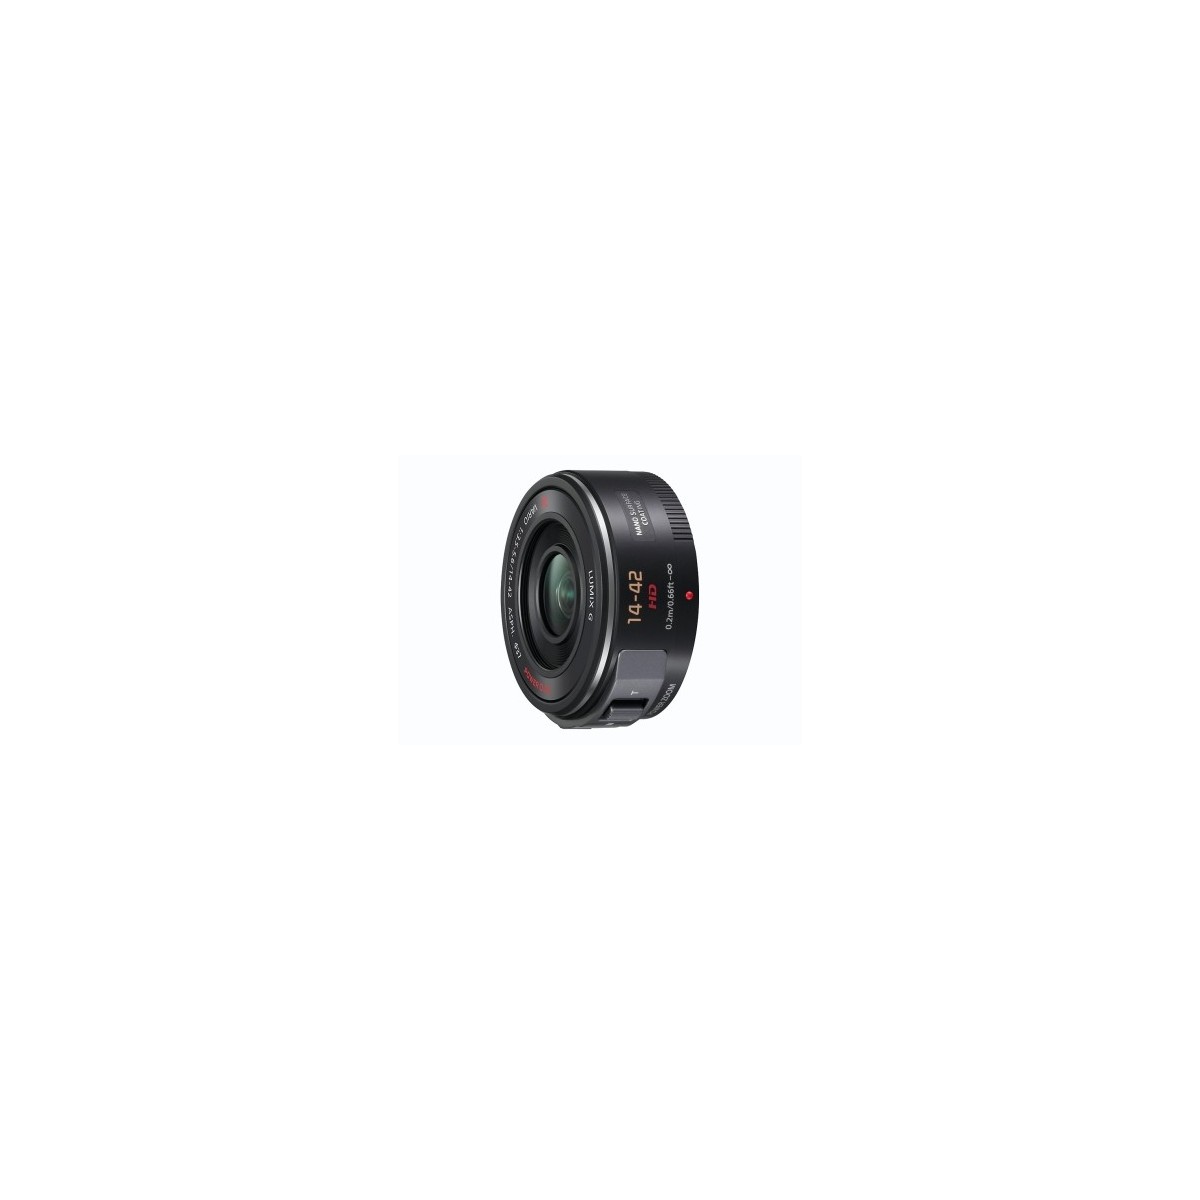 Panasonic 14-42mm F3.5-5.6 - Standard lens - 9-8 - 14 - 42 mm - Image stabilizer - Micro Four Thirds (MFT)